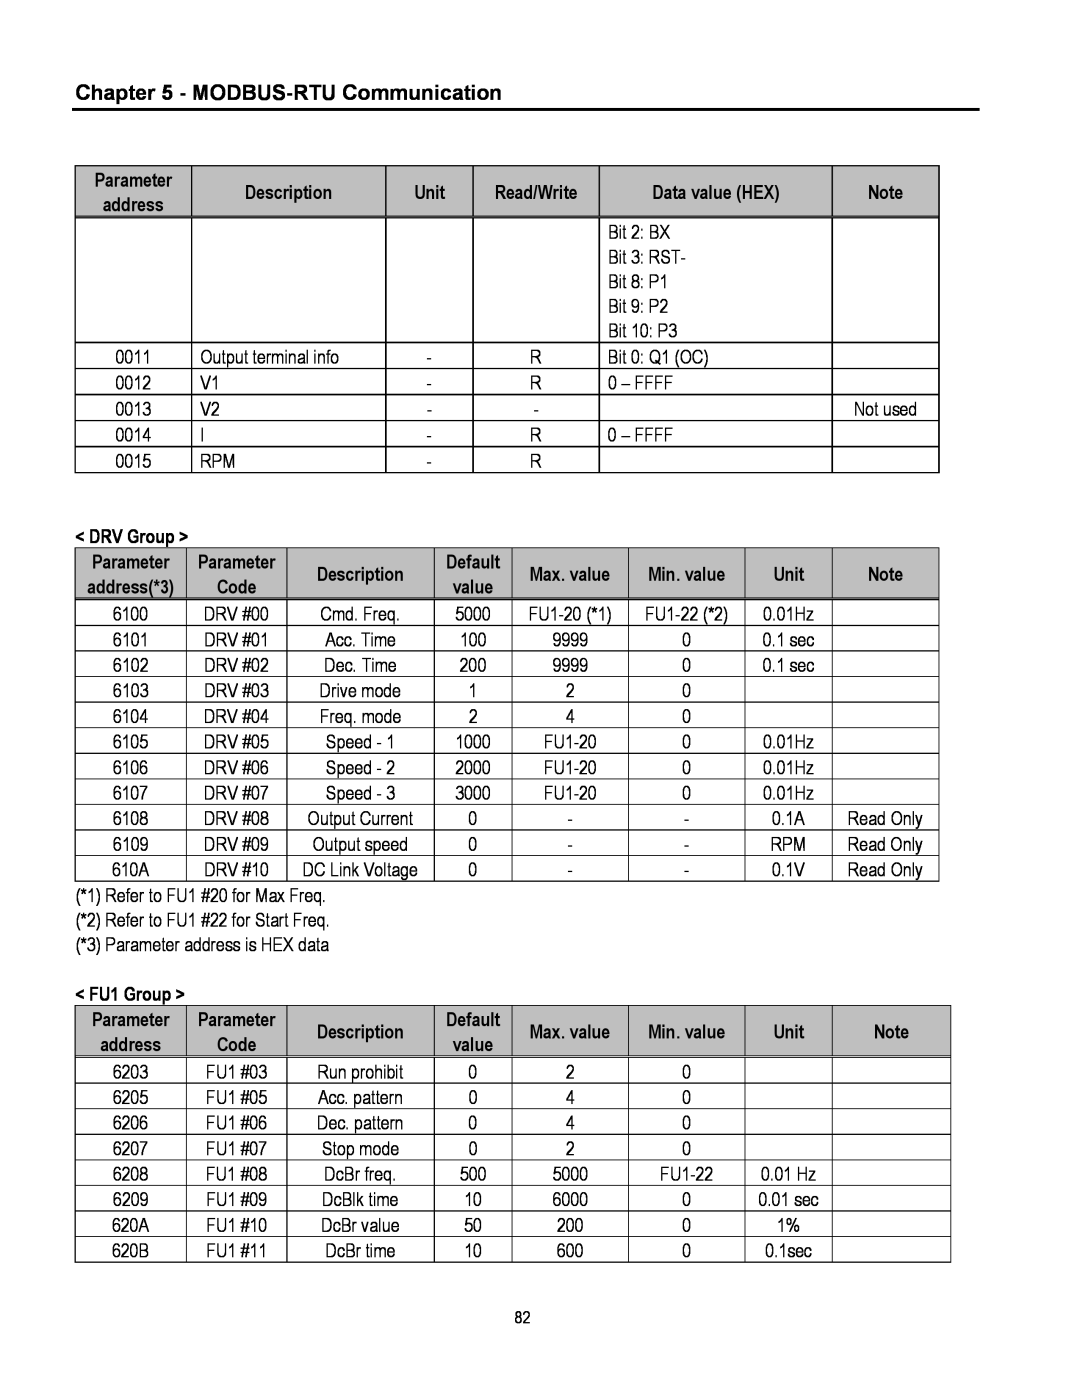 Cleveland Range inverter manual MODBUS-RTUCommunication, Parameter, Description, Data value HEX, Unit 